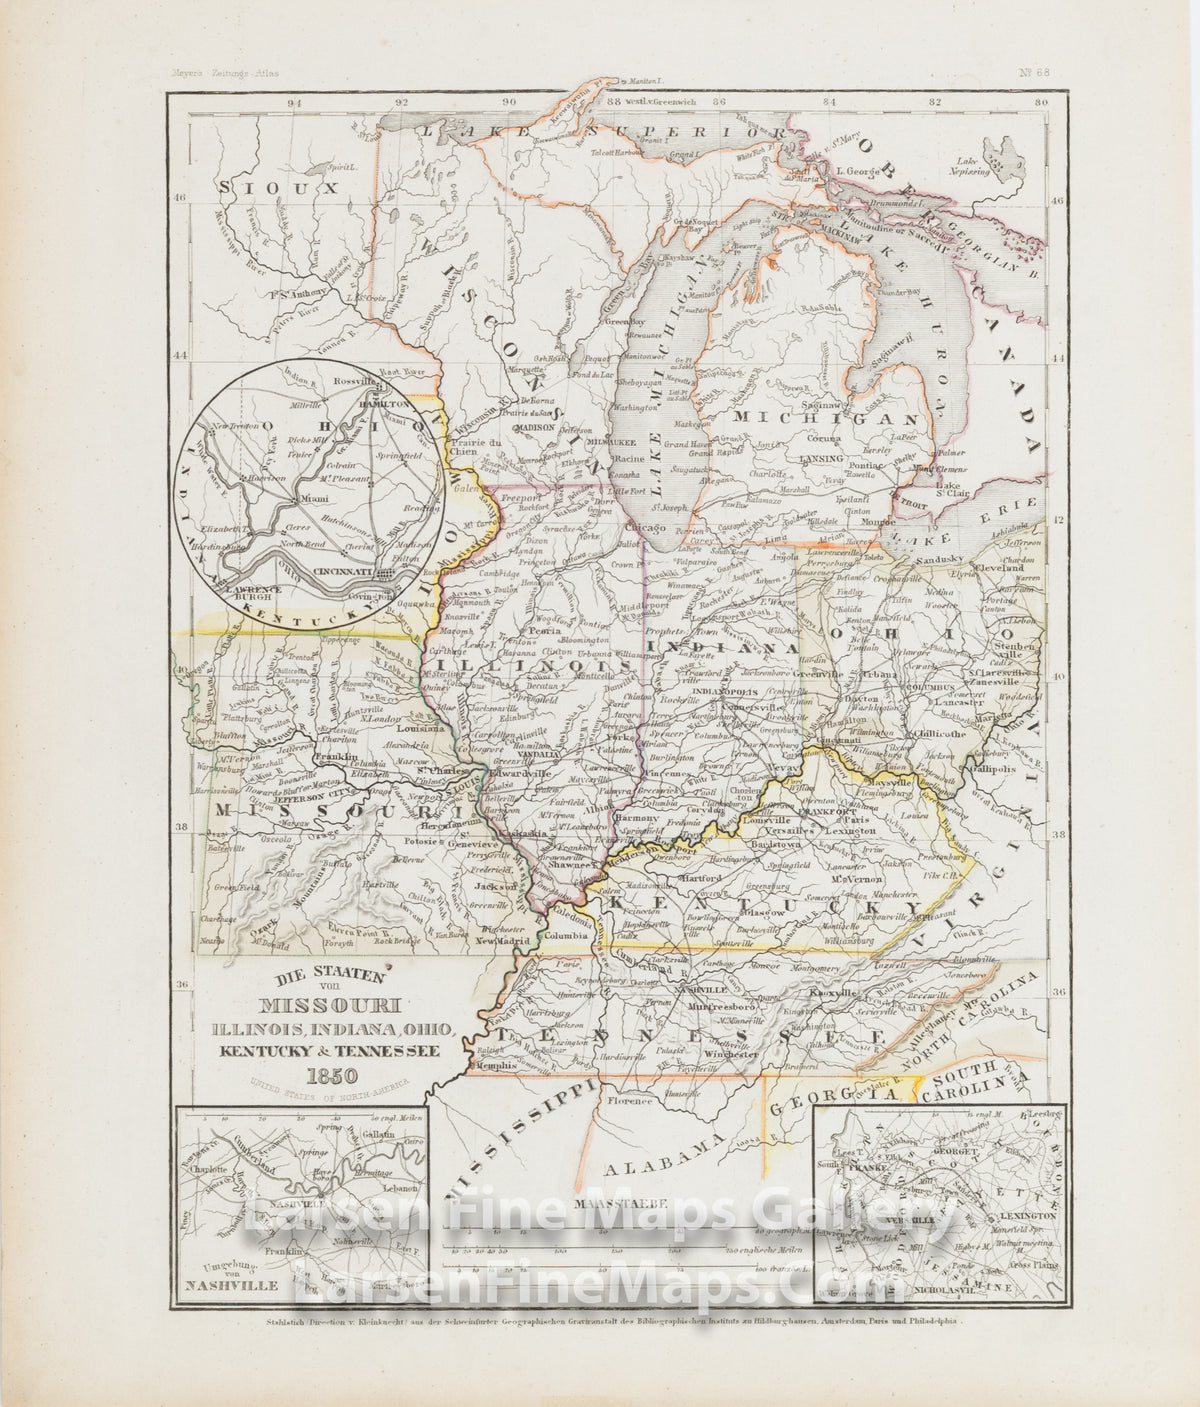 Die Staaten von Missouri, Illinois, Indiana, Ohio, Kentucky & Tennessee 1850, United States of North America